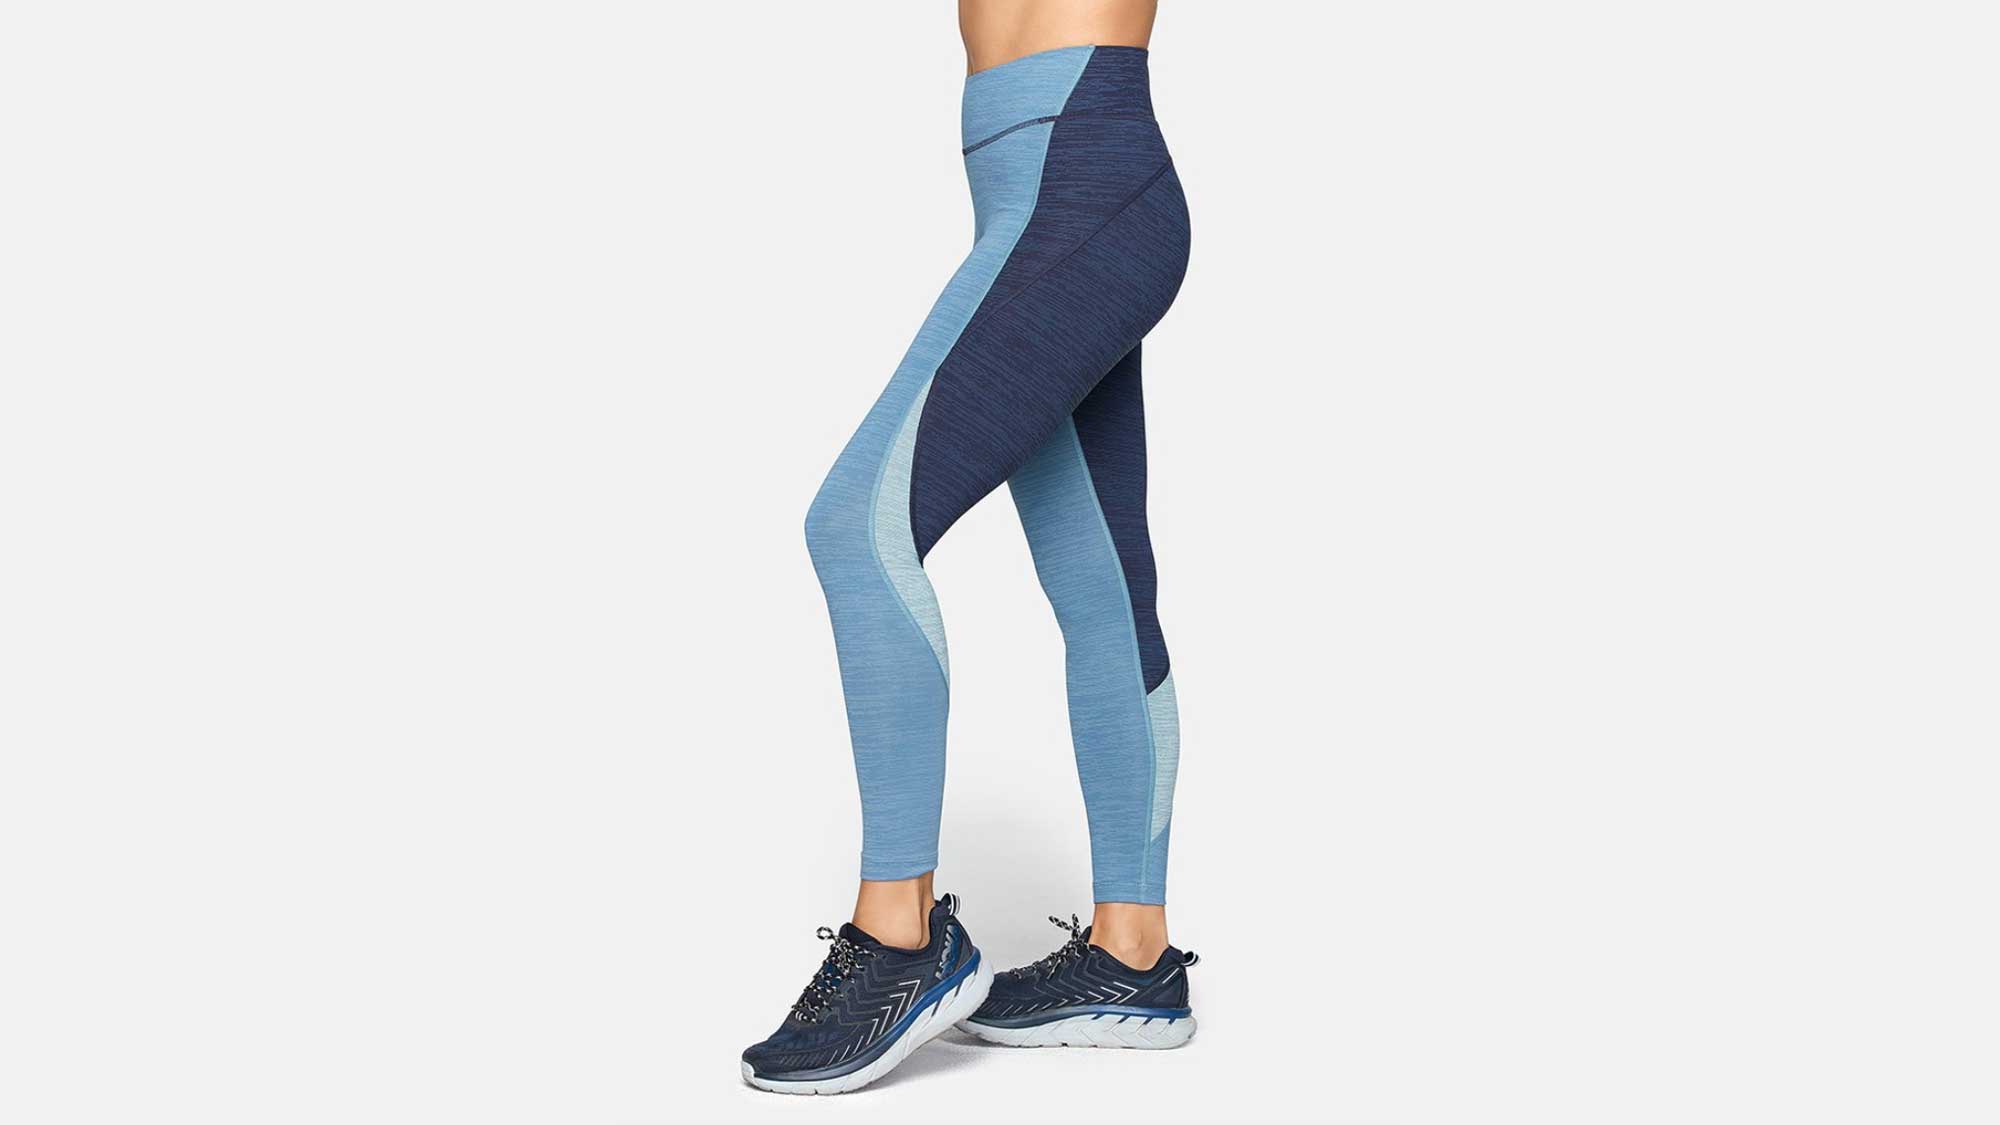 How Do $98 Lululemon Yoga Pants Compare to Cheaper Alternatives